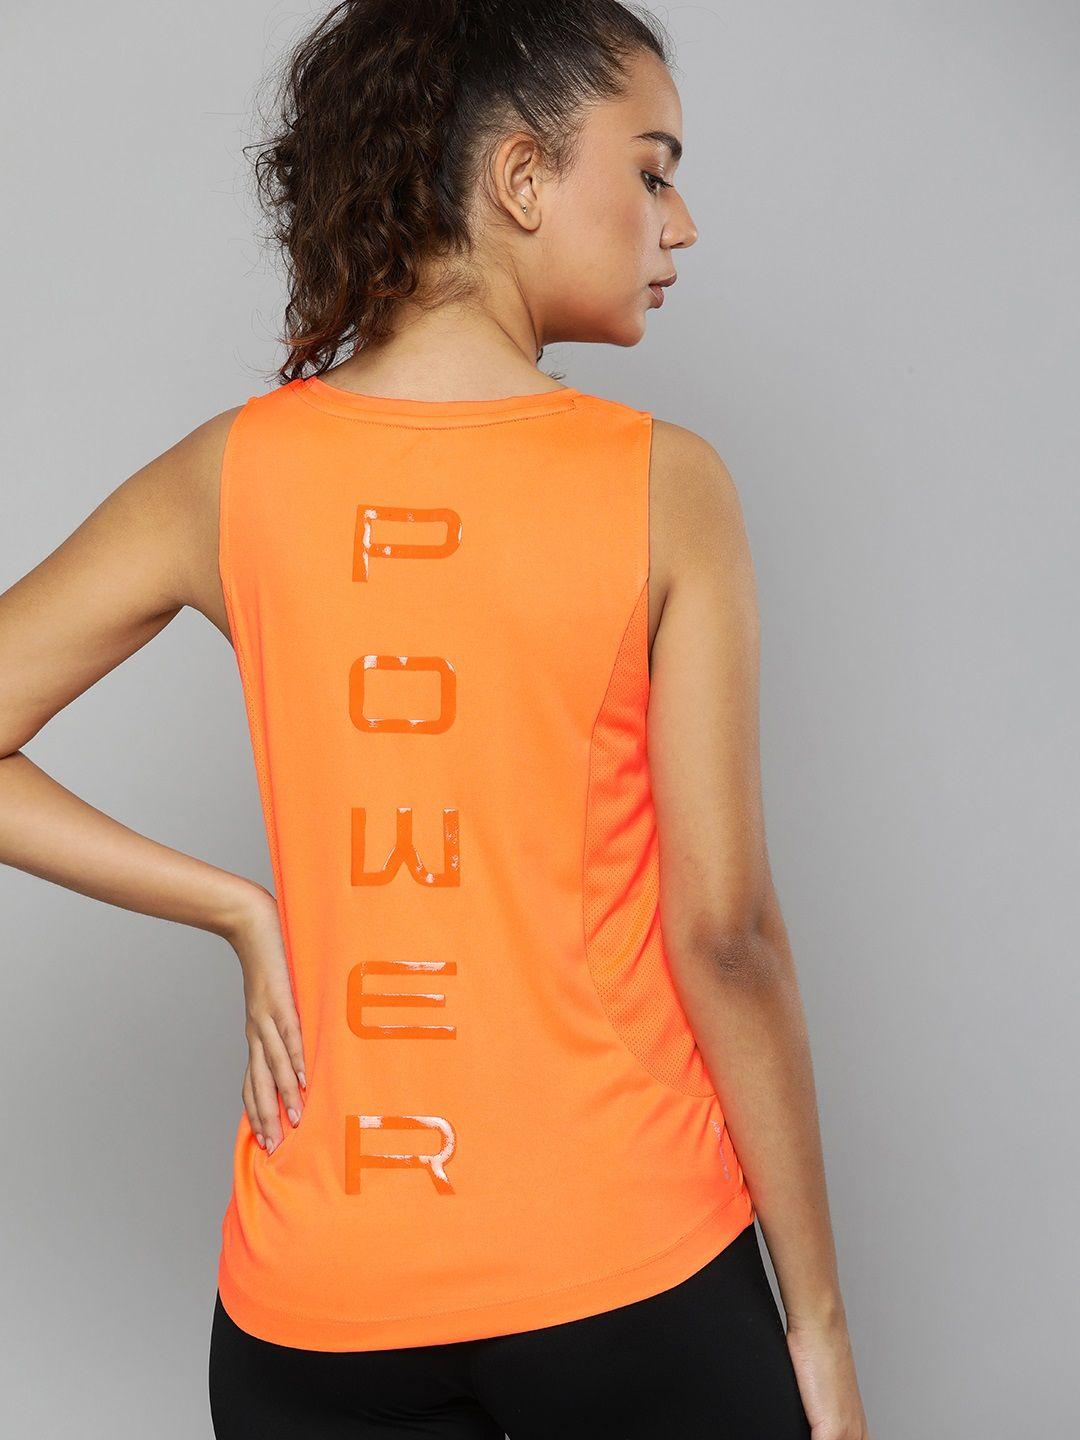 hrx by hrithik roshan training women orange rapid-dry typography top